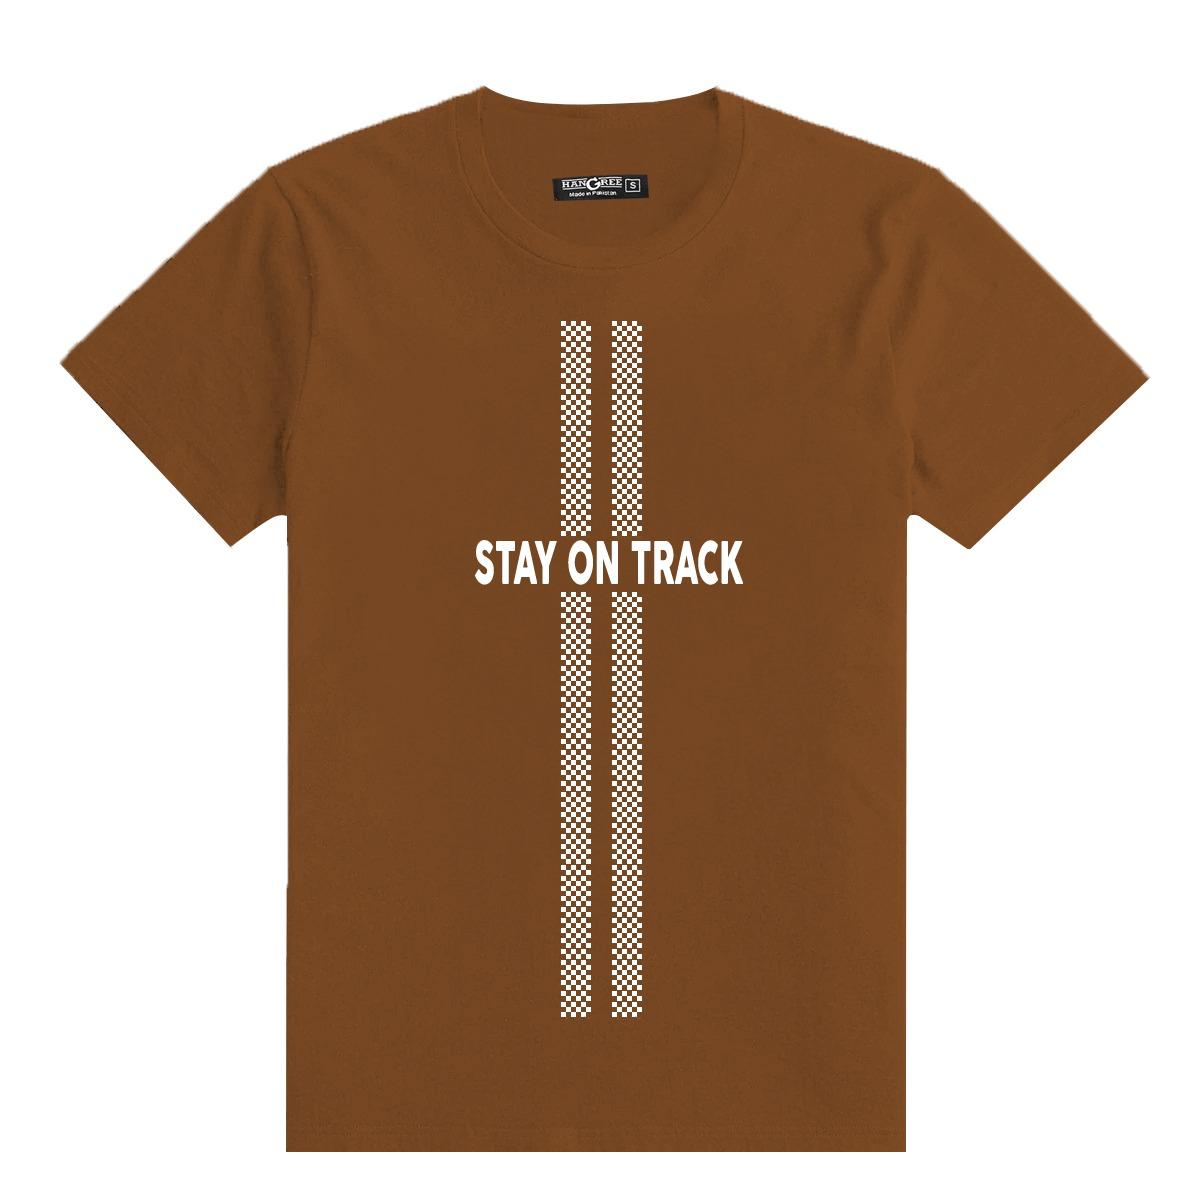 HG "STAY ON TRACK" Printed Tee Shirt - Tan Brown